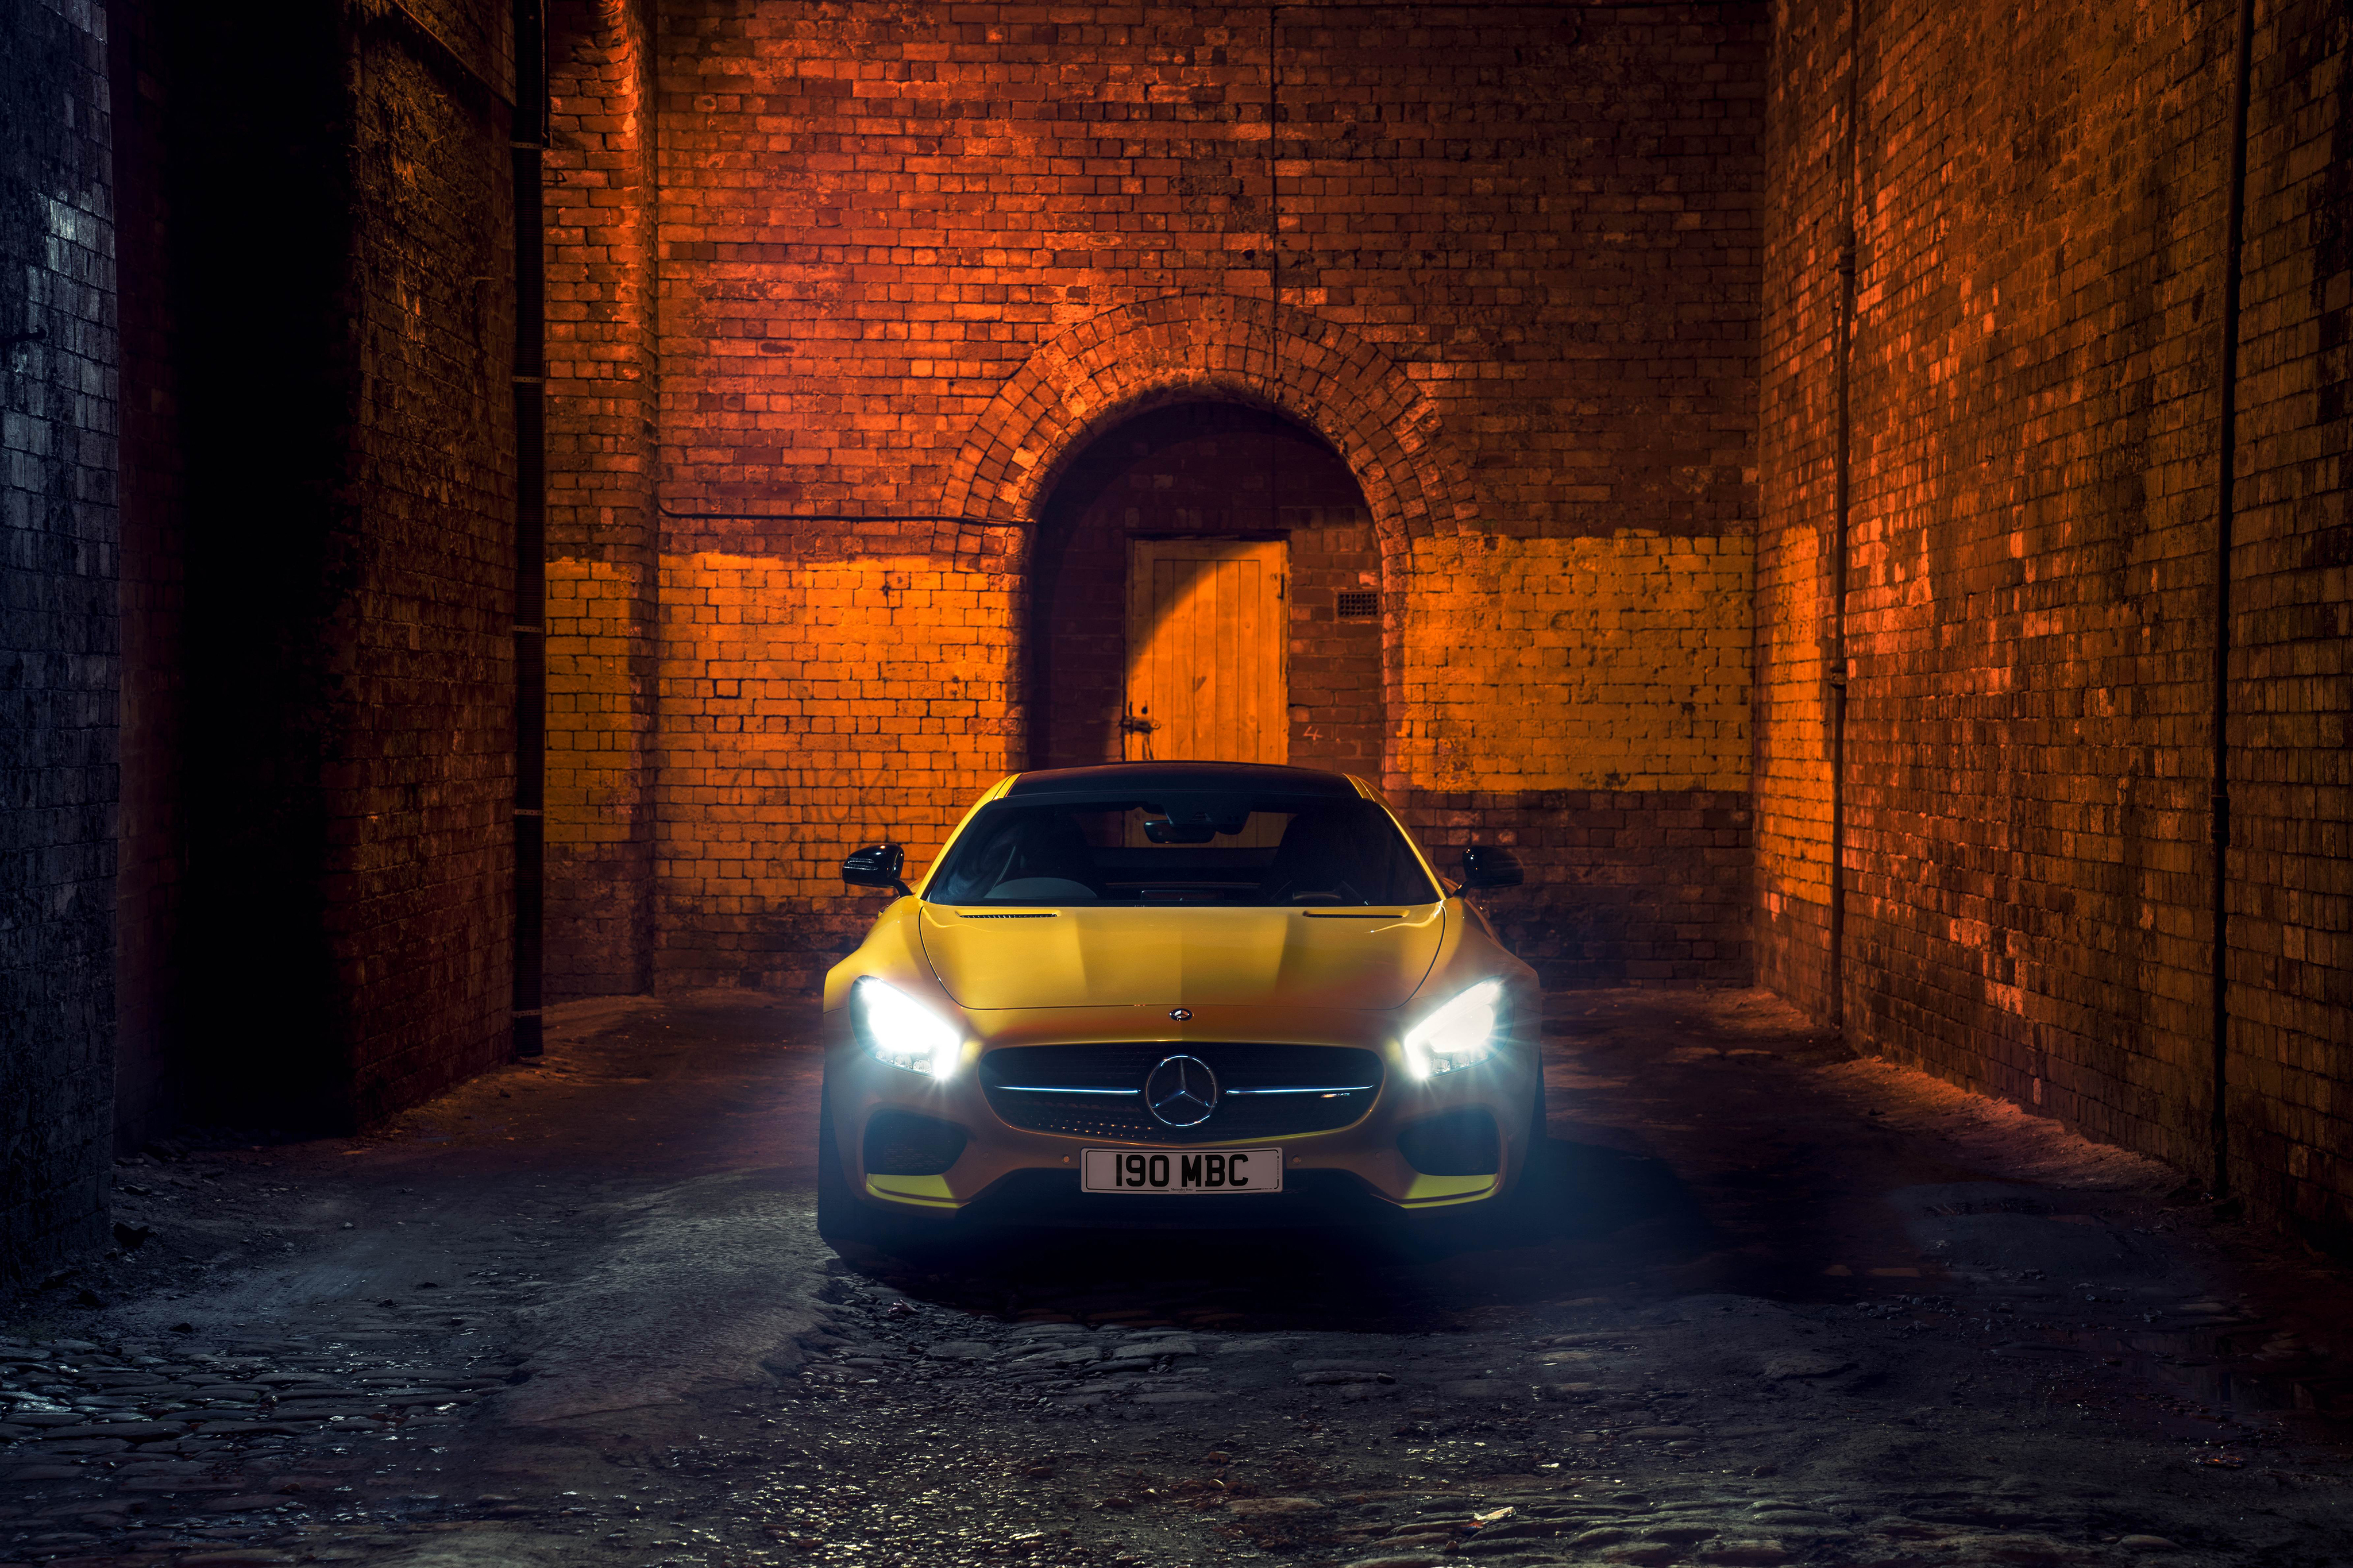 Light avto. Mercedes Benz c 2015 желтый. Машина ночью. Машина с горящими фарами. Свет фар авто.